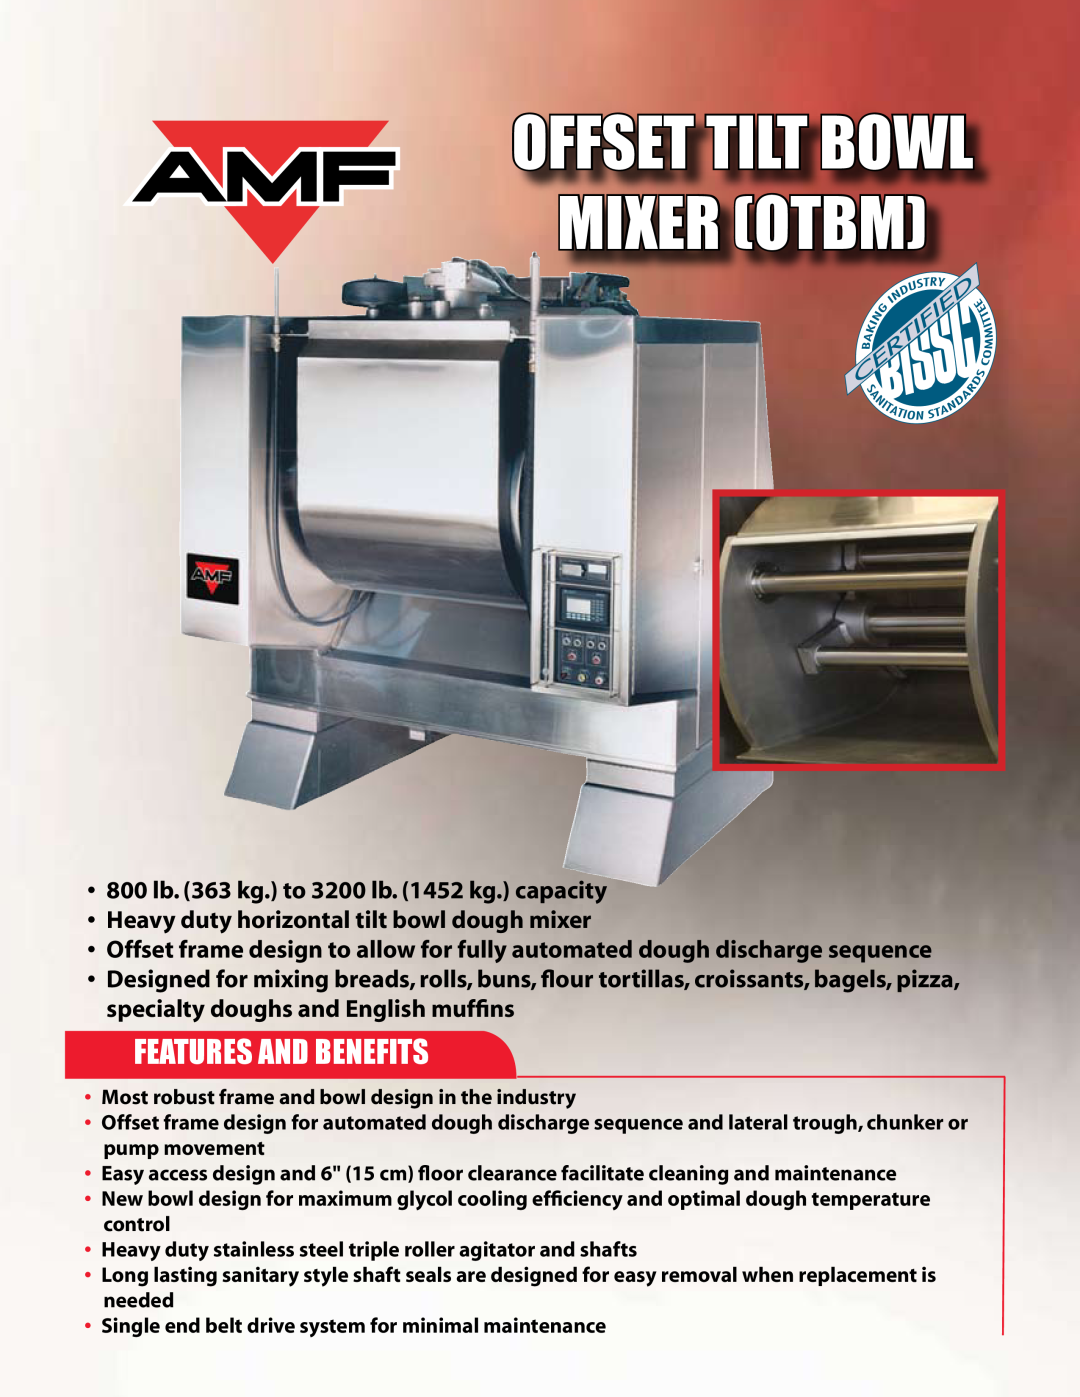 AMF Offset Tilt Bowl Mixer (OTBM) manual Features And Benefits, Mixer Otbm 